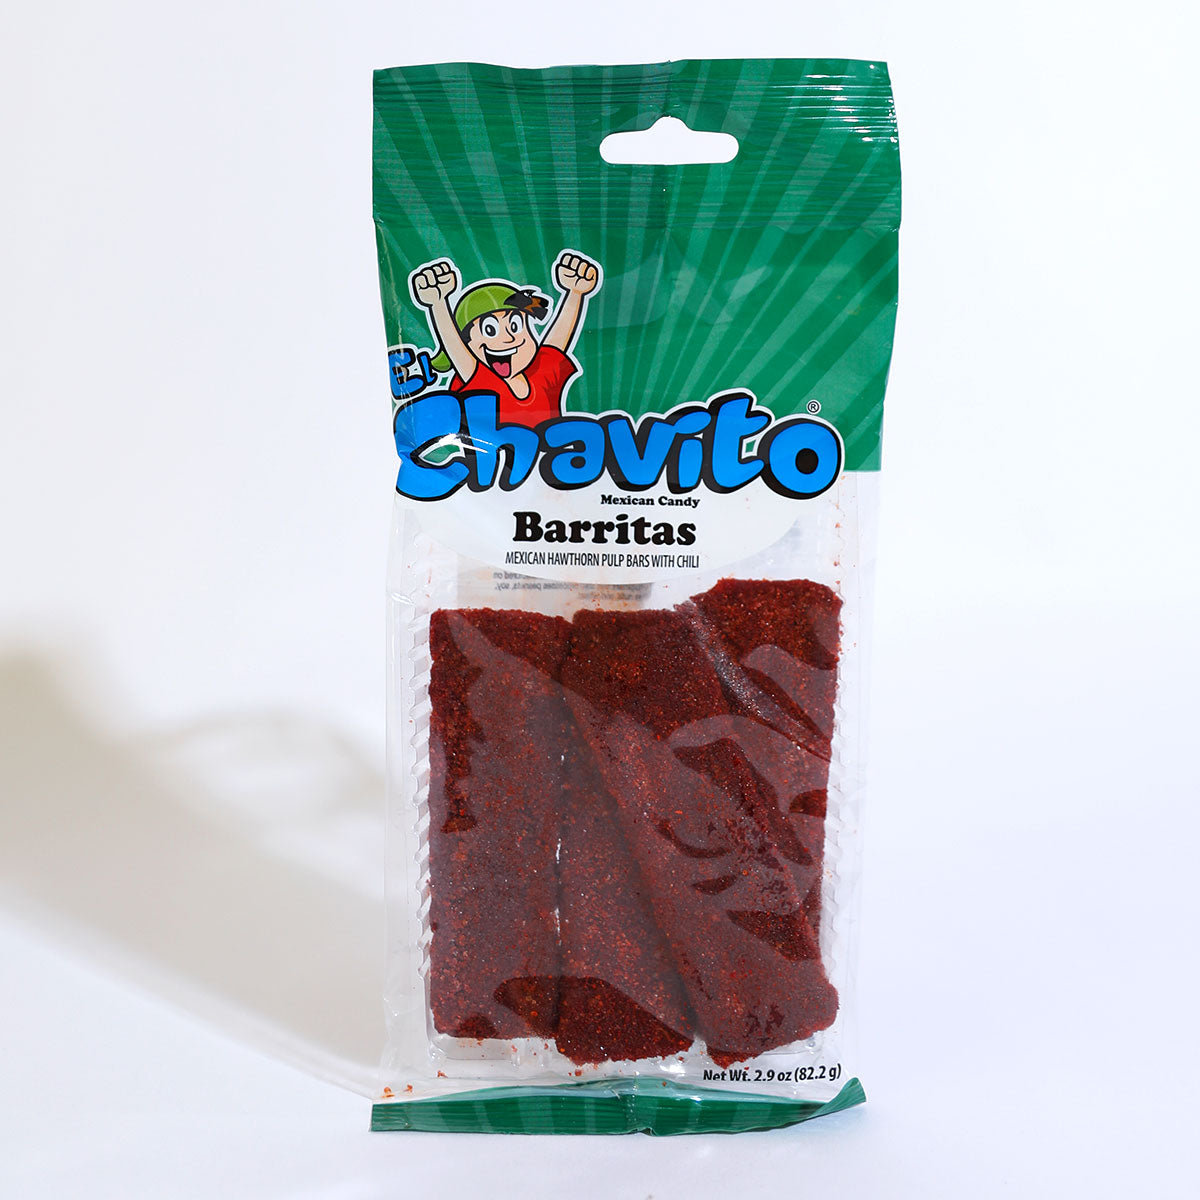 El Chavito: Barritas